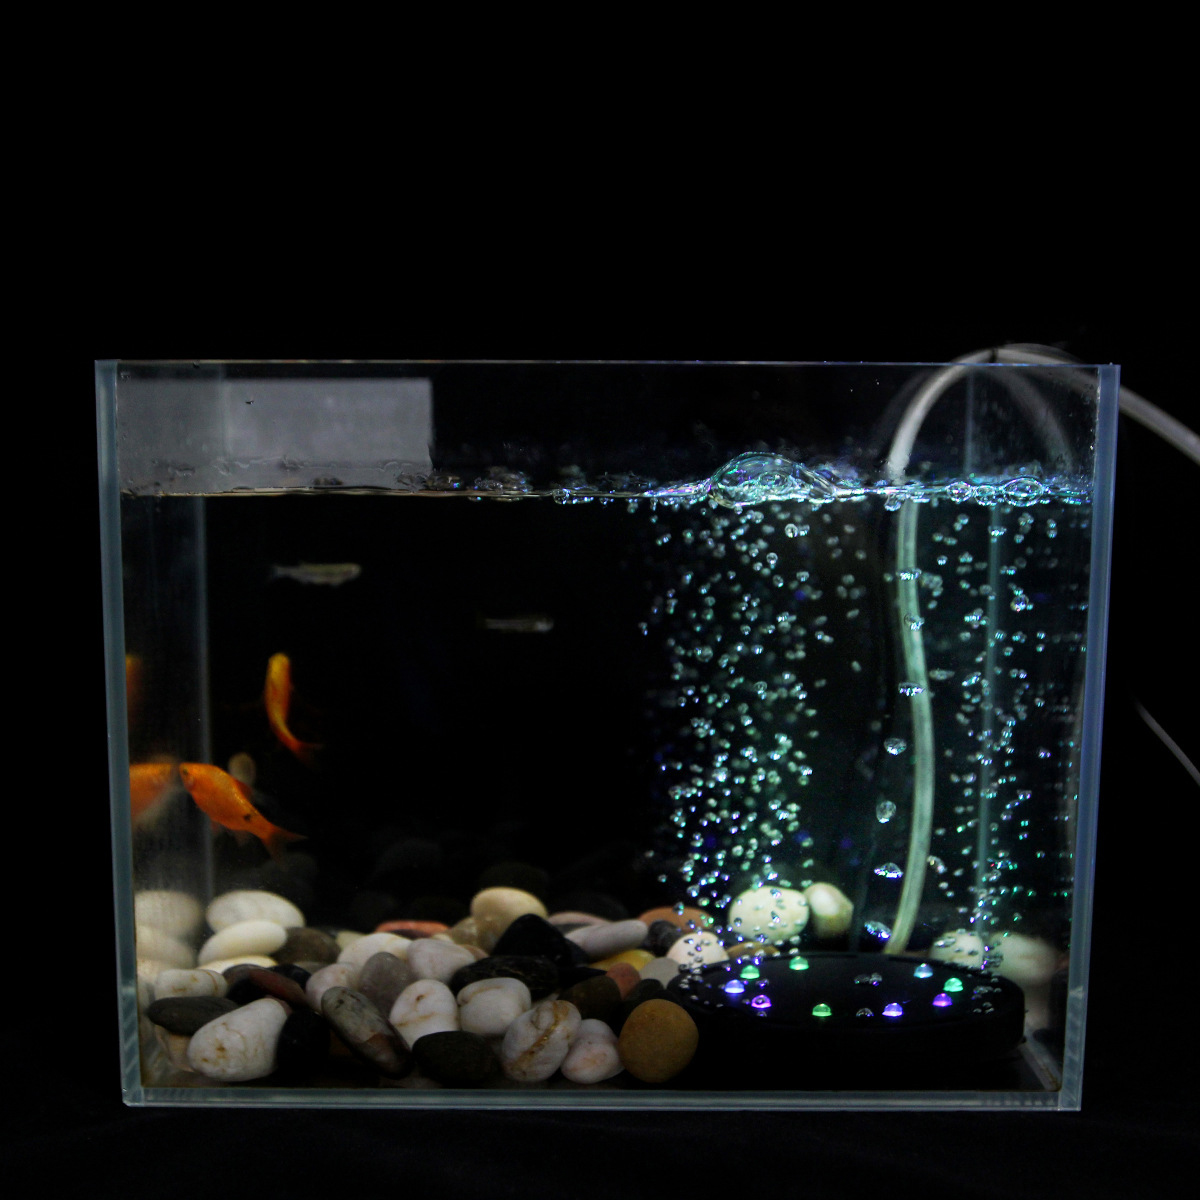 12-RGB-LEDs-Underwater-Submersible-Fish-Tank-Light-Color-Changing-Air-Bubble-Light-Waterproof-Aquari-1878853-7